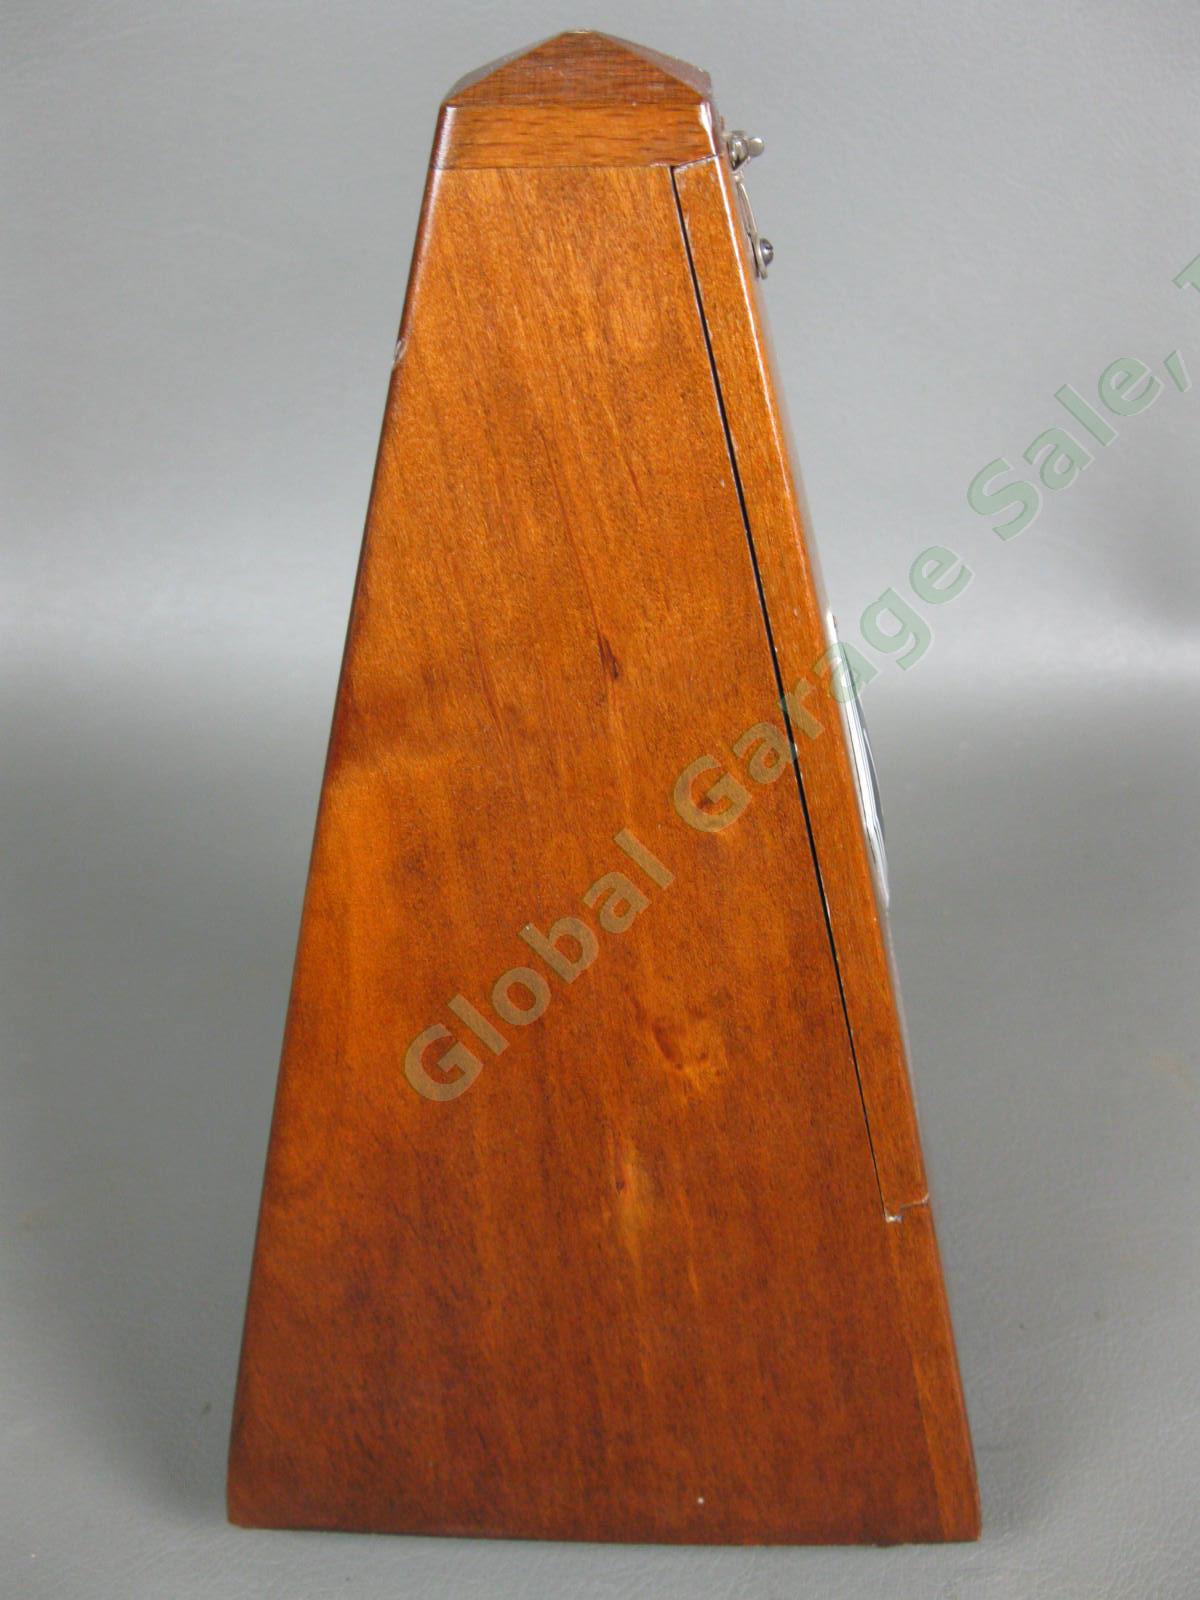 Vintage Wittner Metronome 803m Germany Wood Pyramid Adjustable Speed WORKING 4